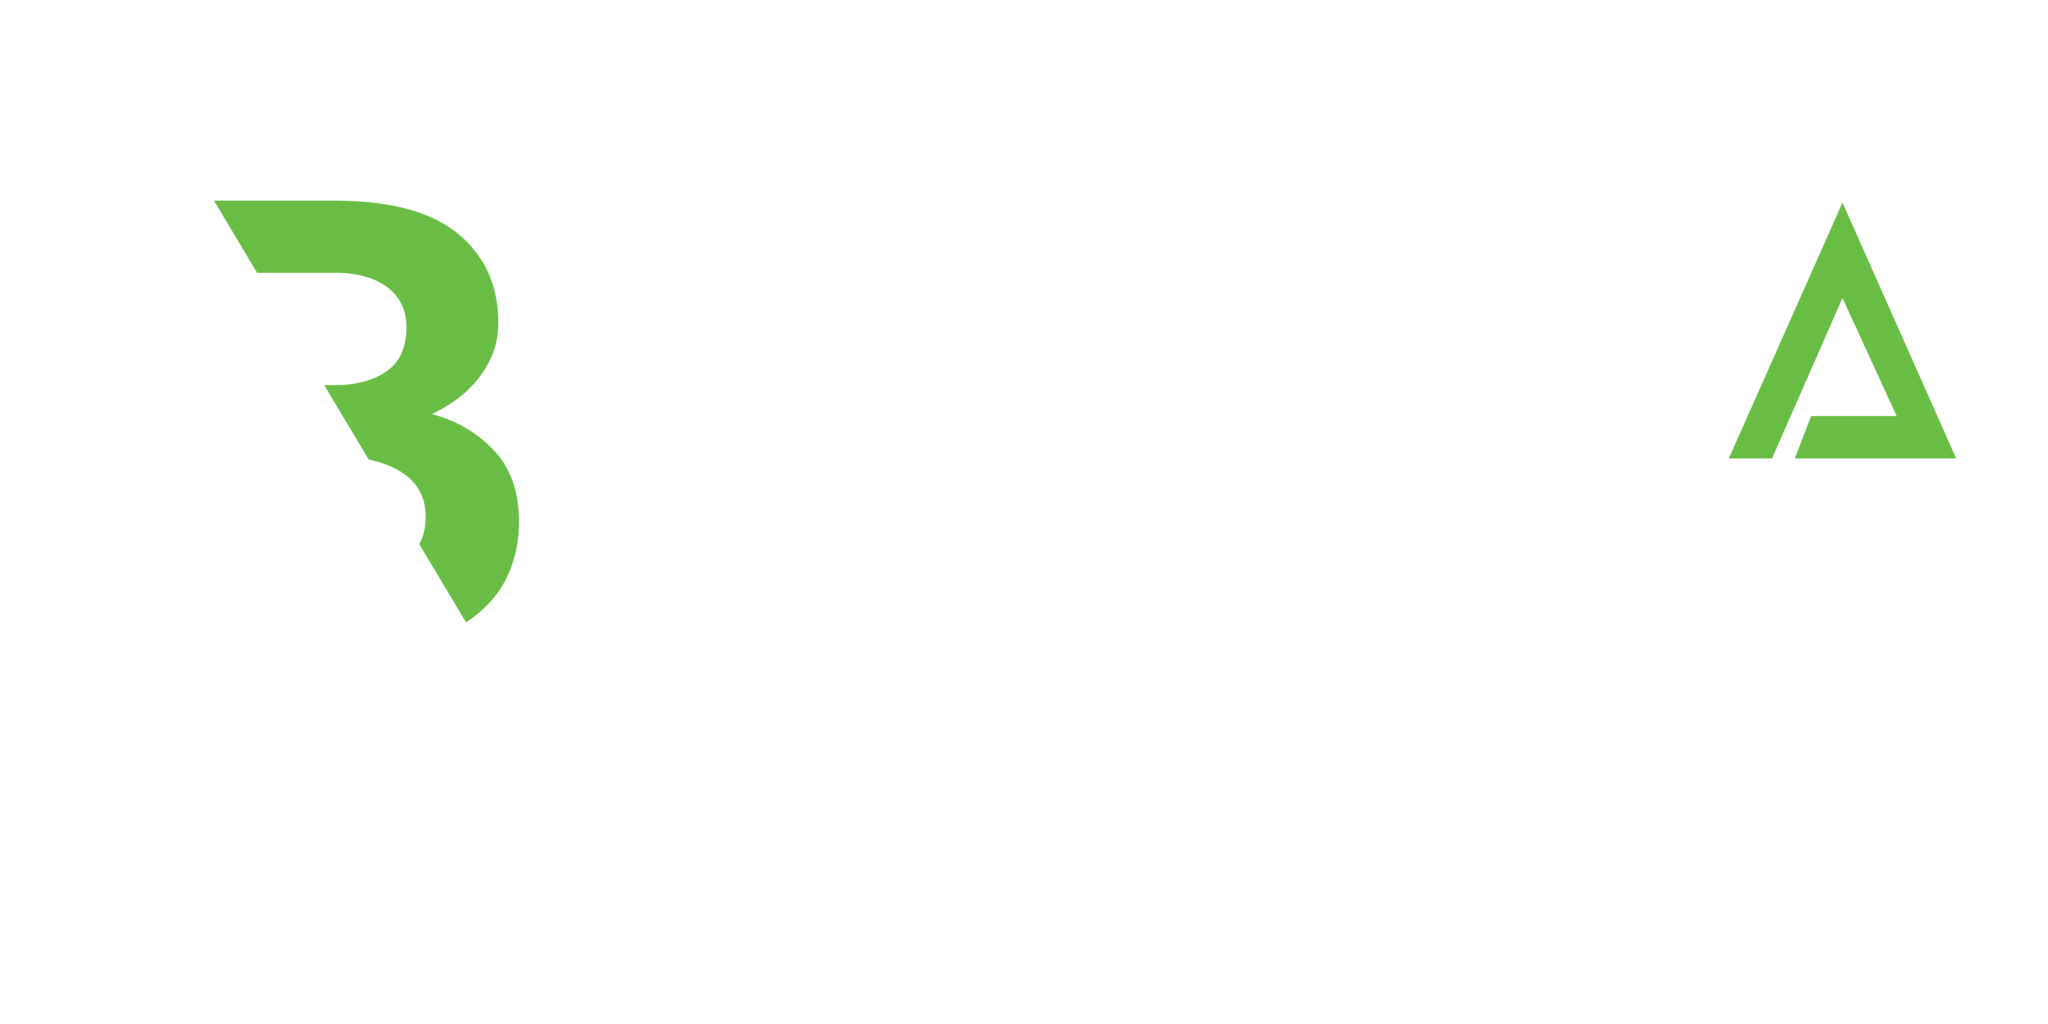 Beleura logo black-01